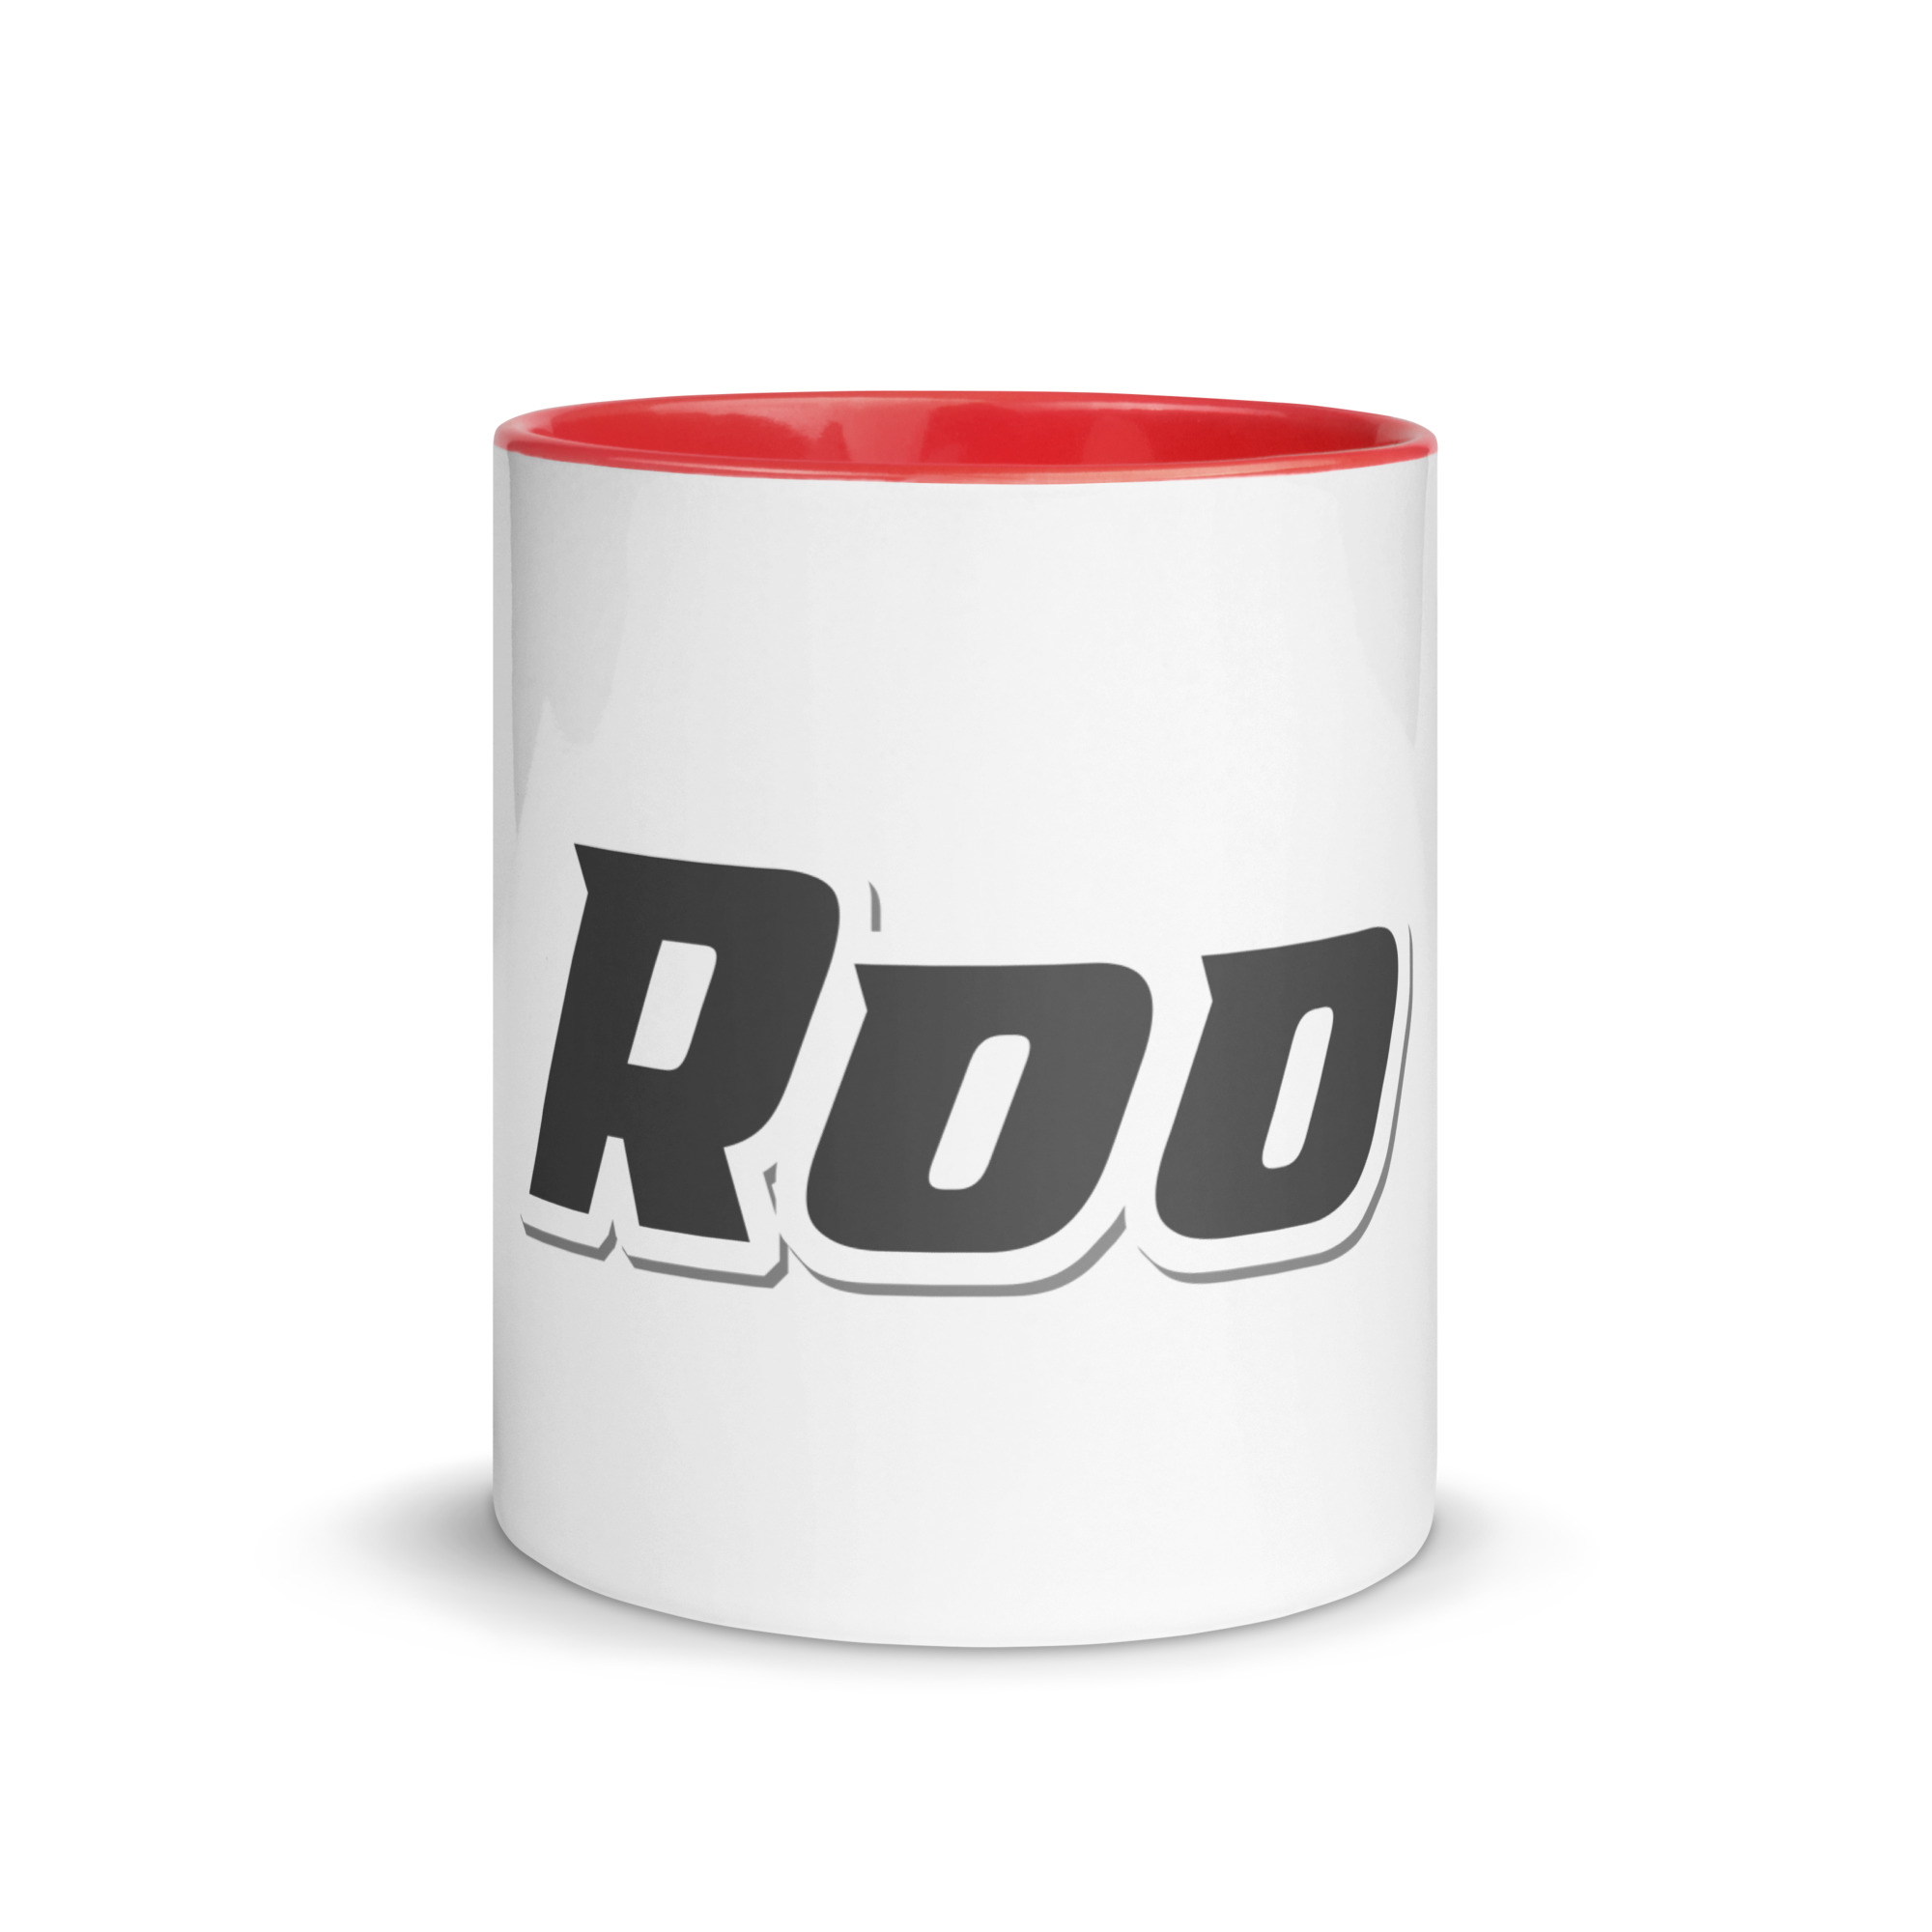 white-ceramic-mug-with-color-inside-red-11-oz-front-6525b6484c203.jpg